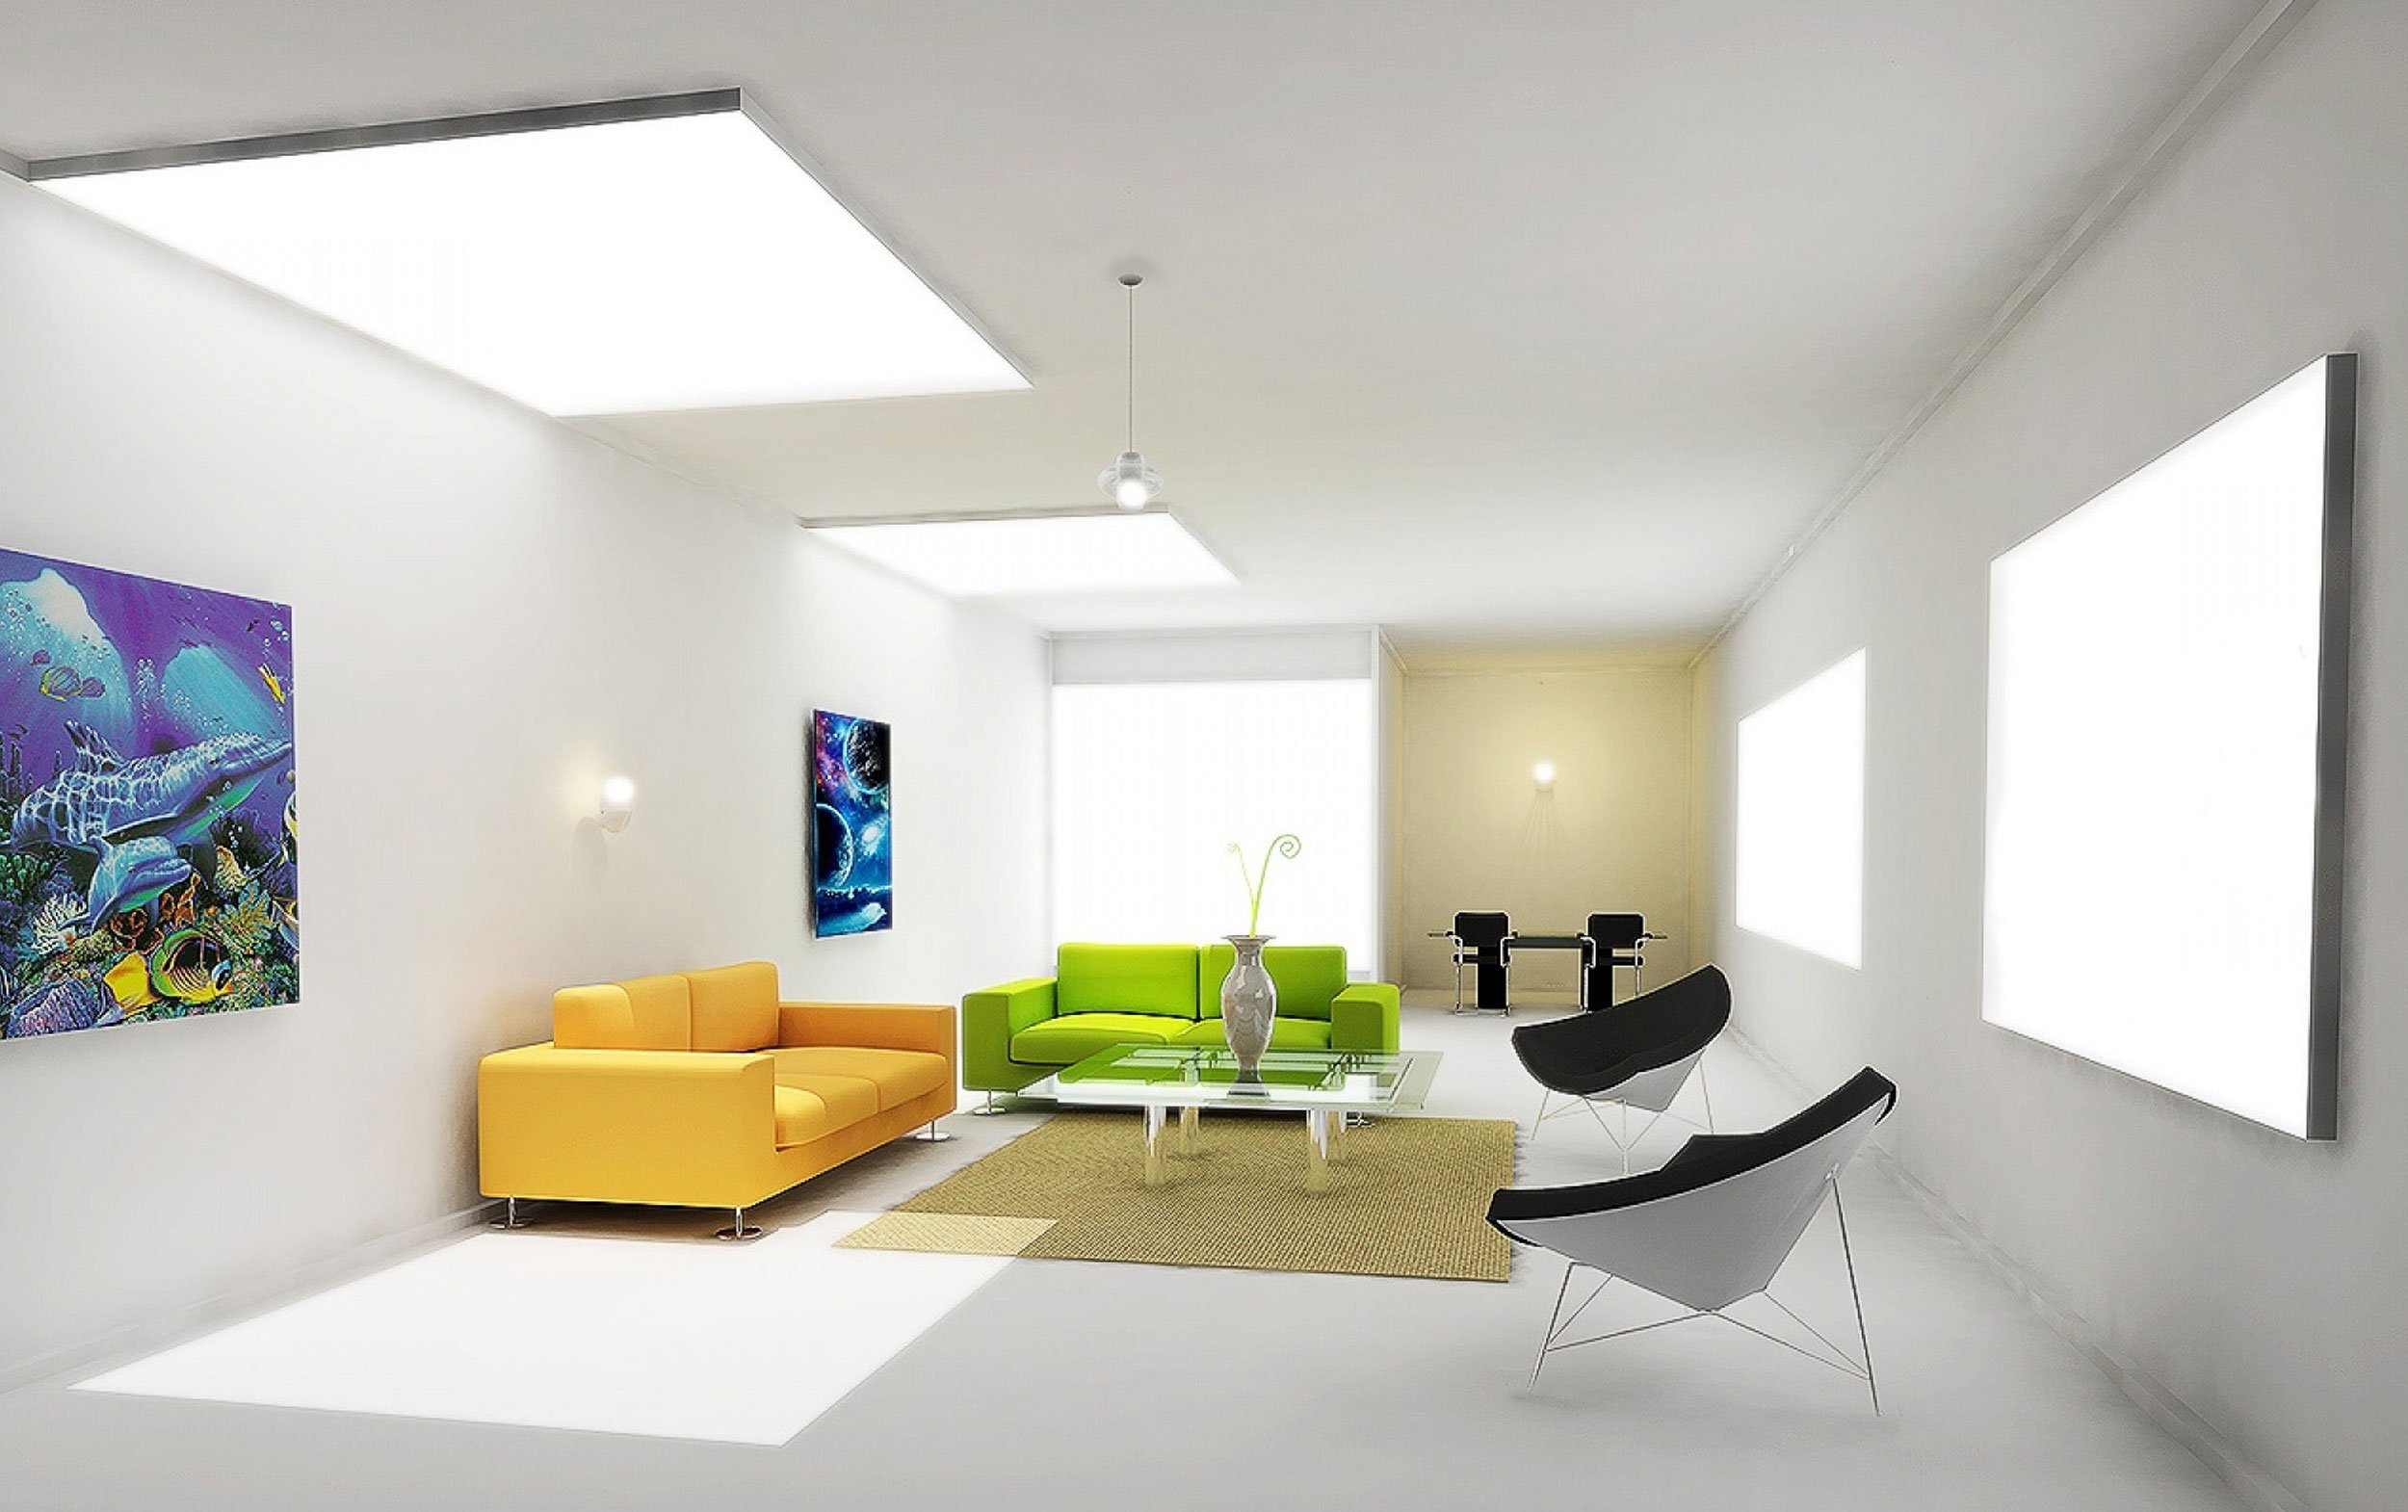 apartment, Condominium, Condo, Interior, Design, Room, House, Home,  Furniture Wallpapers HD / Desktop and Mobile Backgrounds